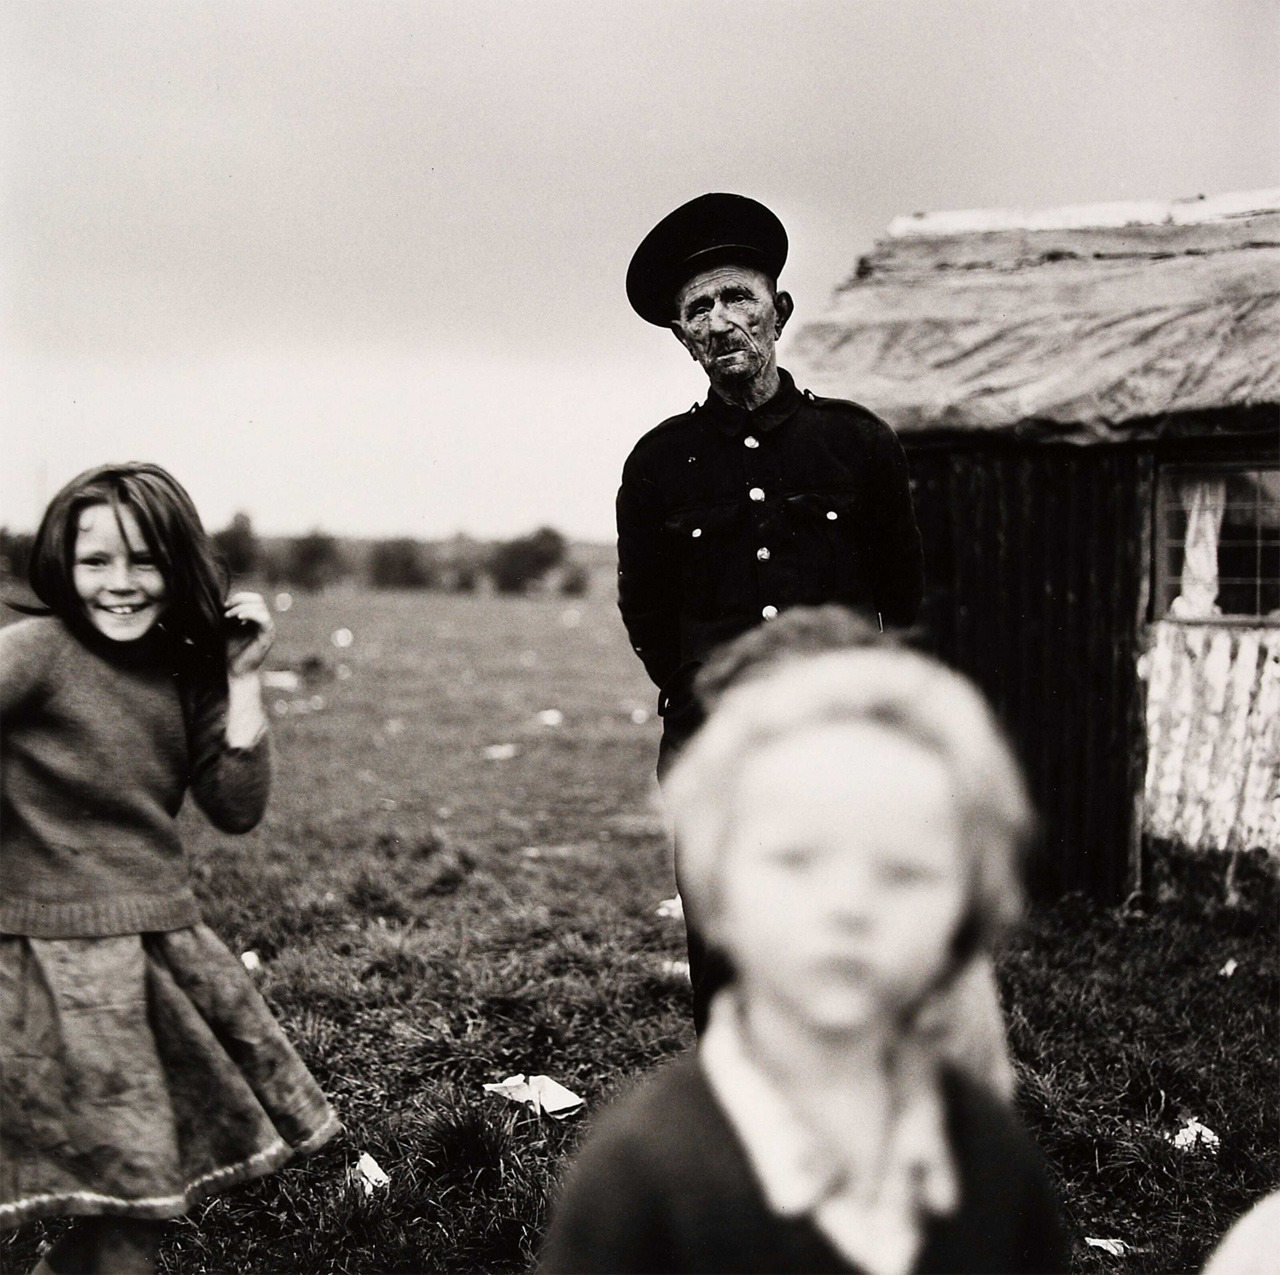 Chimney Sweep and Children, Ireland photo by Alen MacWeeney, 1965